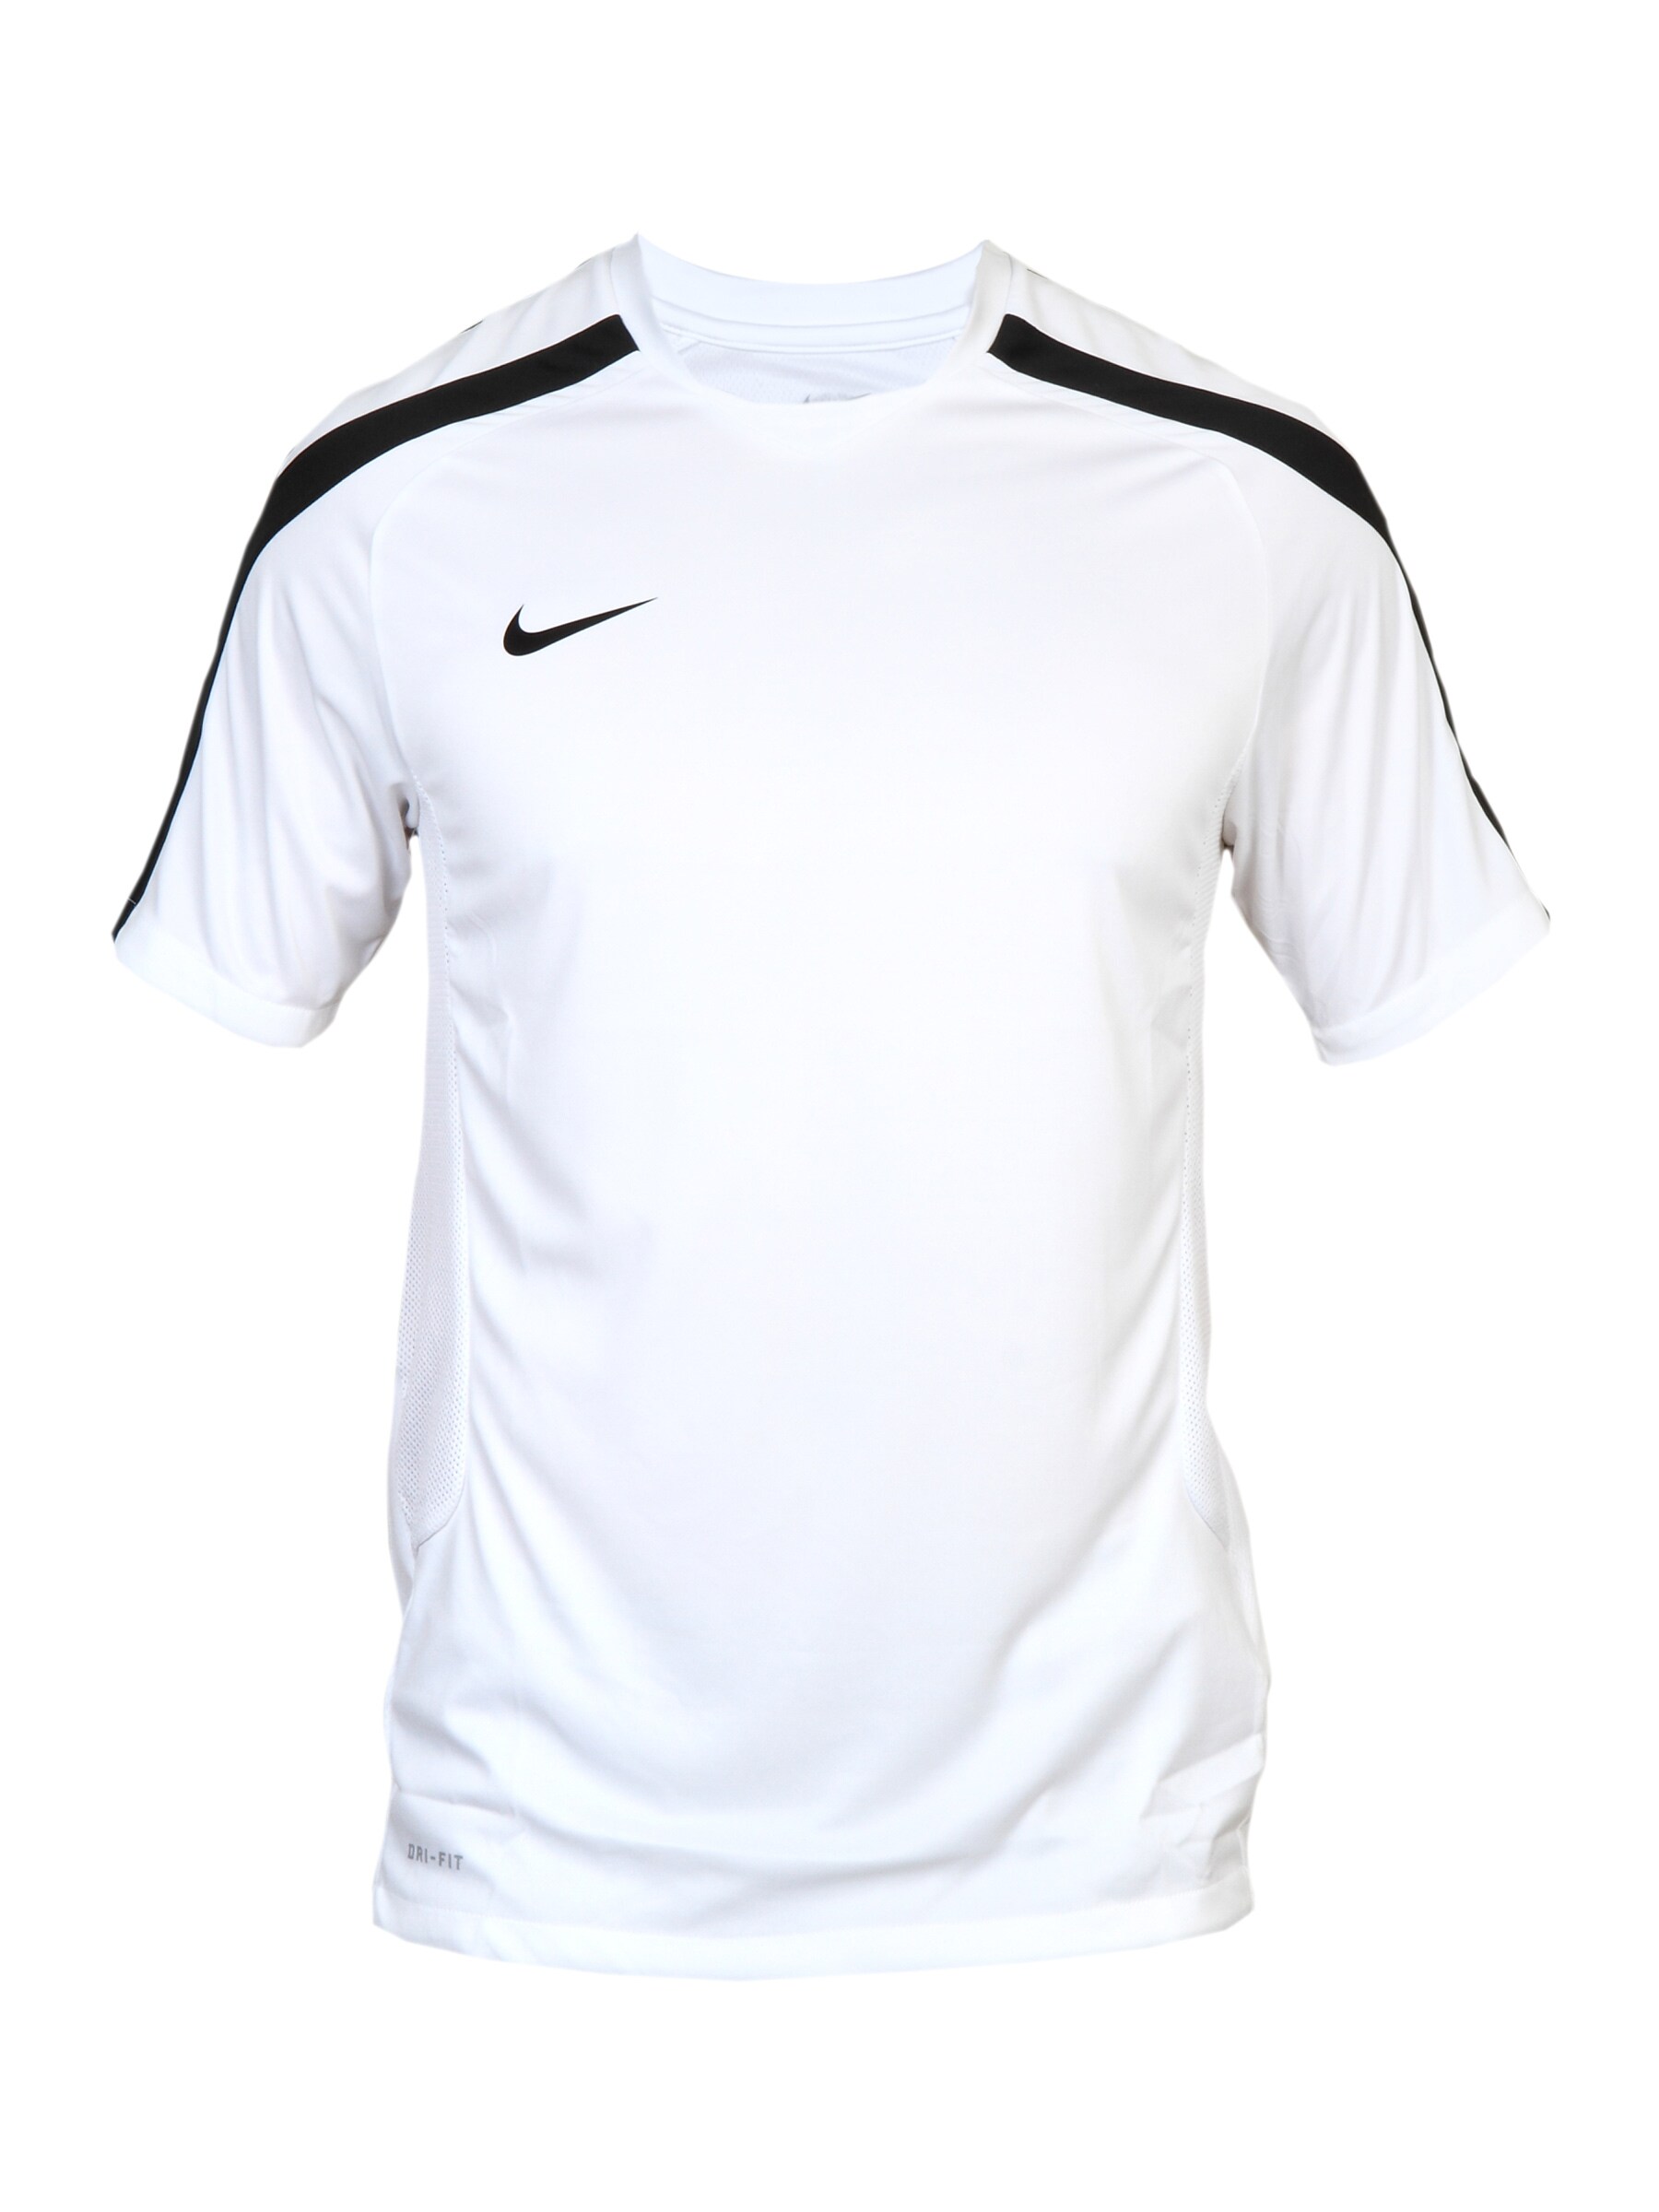 Nike Men's Ss Training White T-shirt